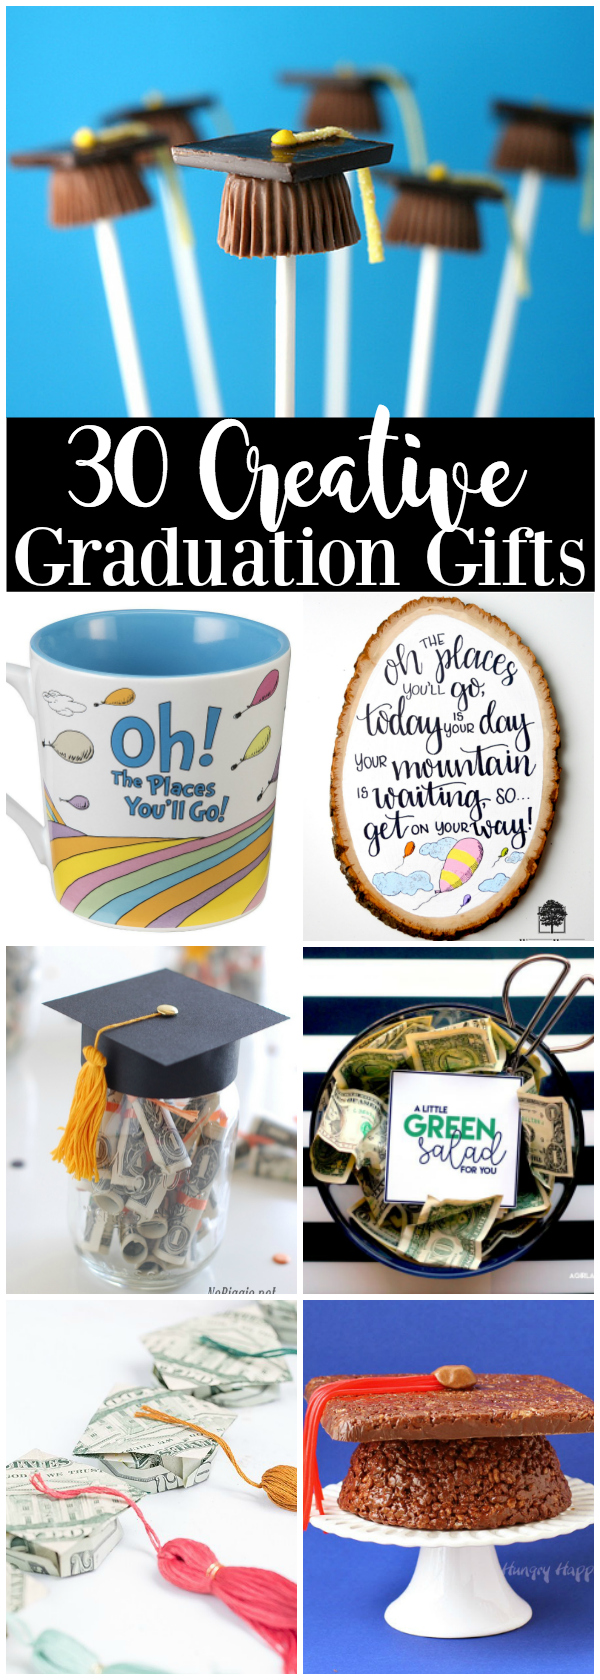 30-Creative-Graduation-Gifts